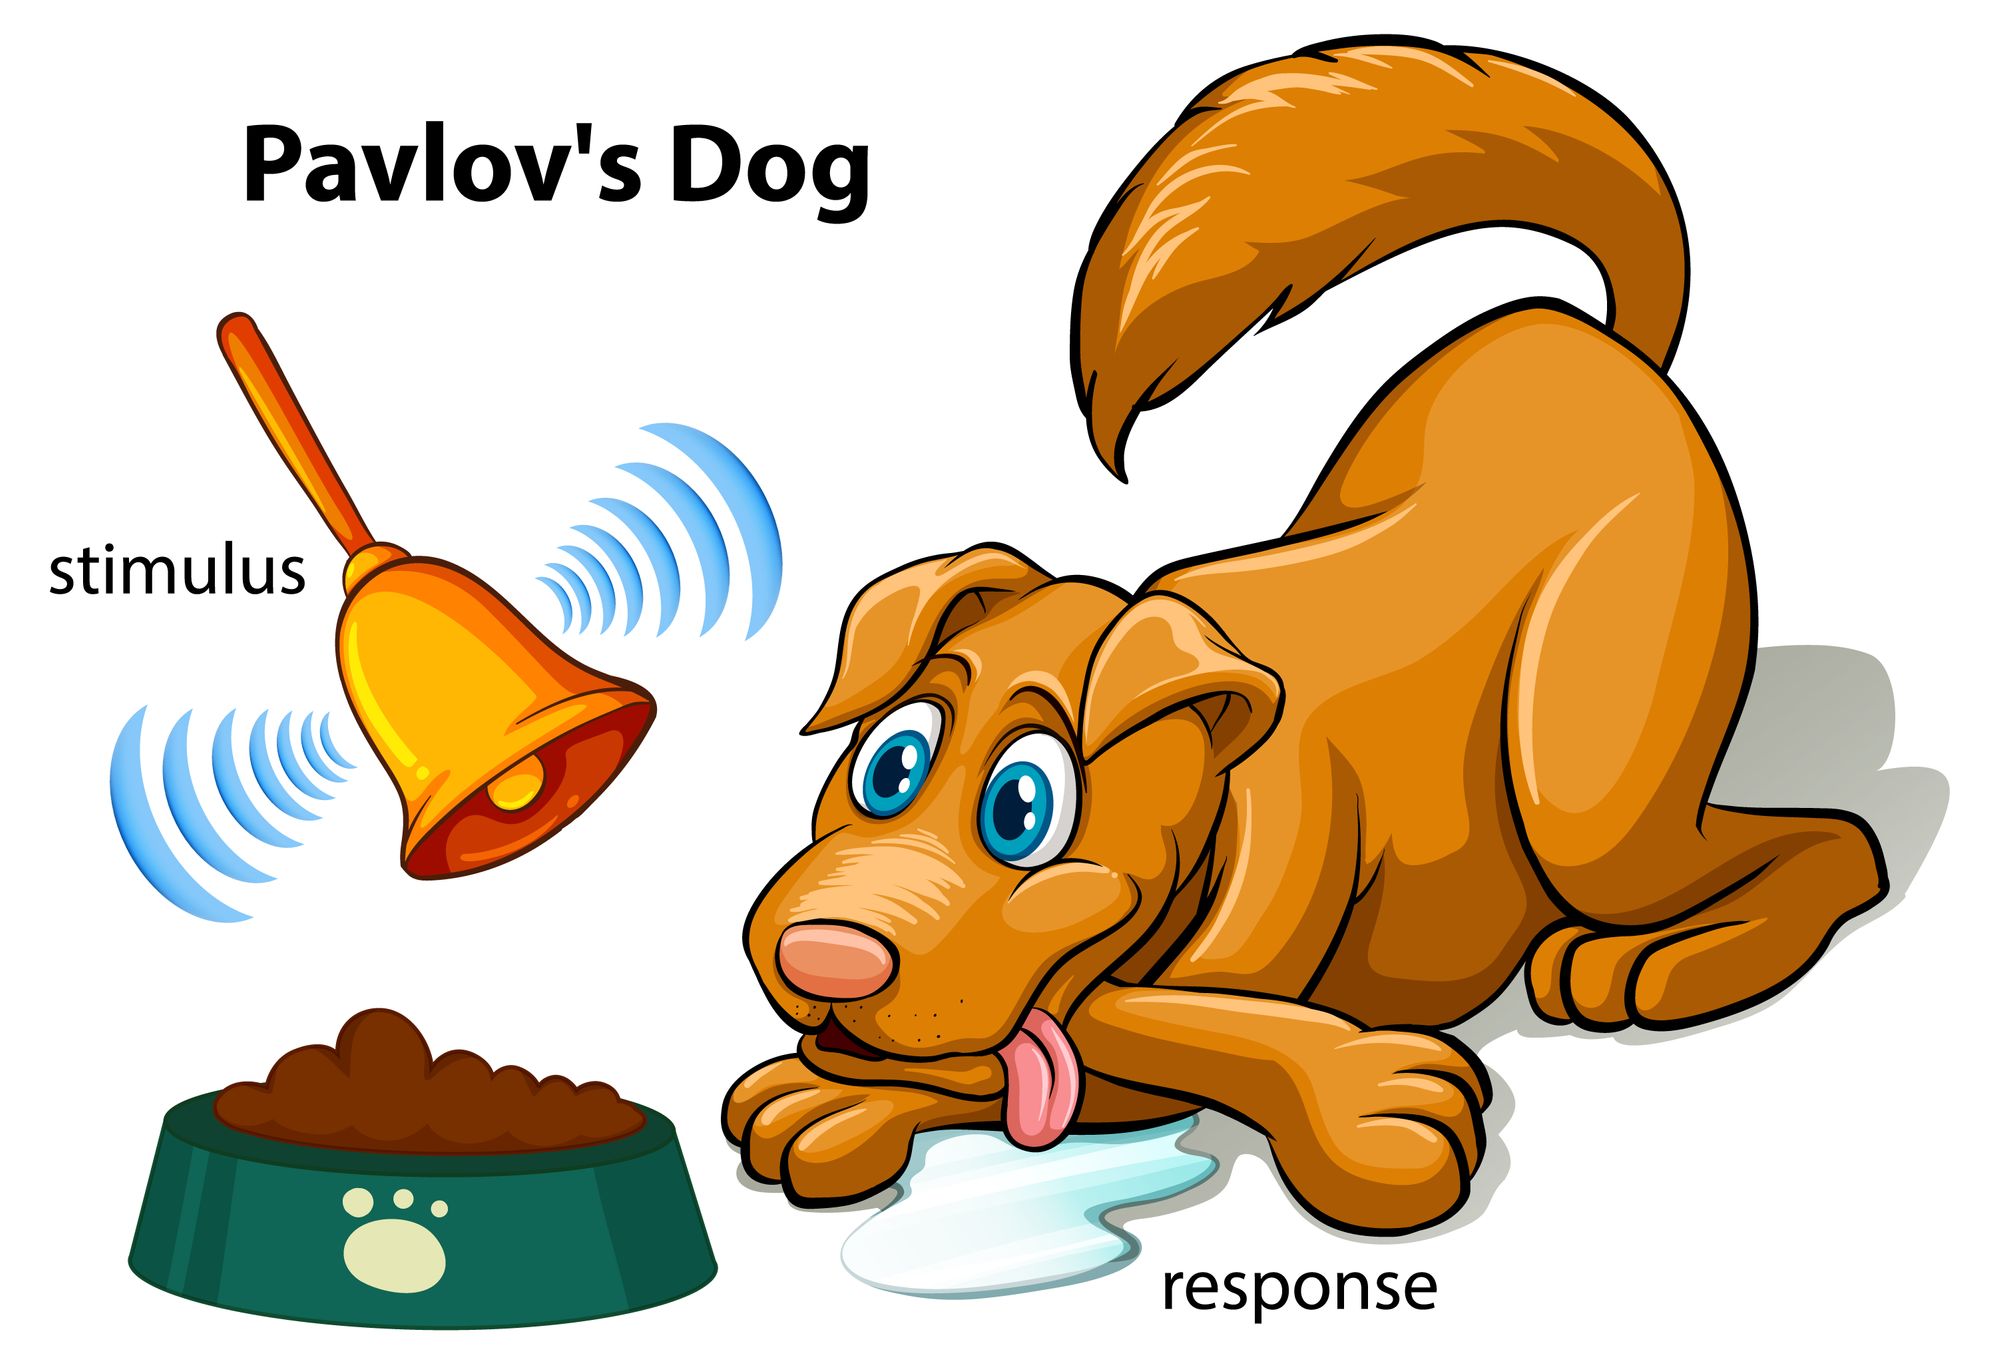 https://www.freepik.com/free-vector/pavlov-s-dog-experiment-vector_39265134.htm